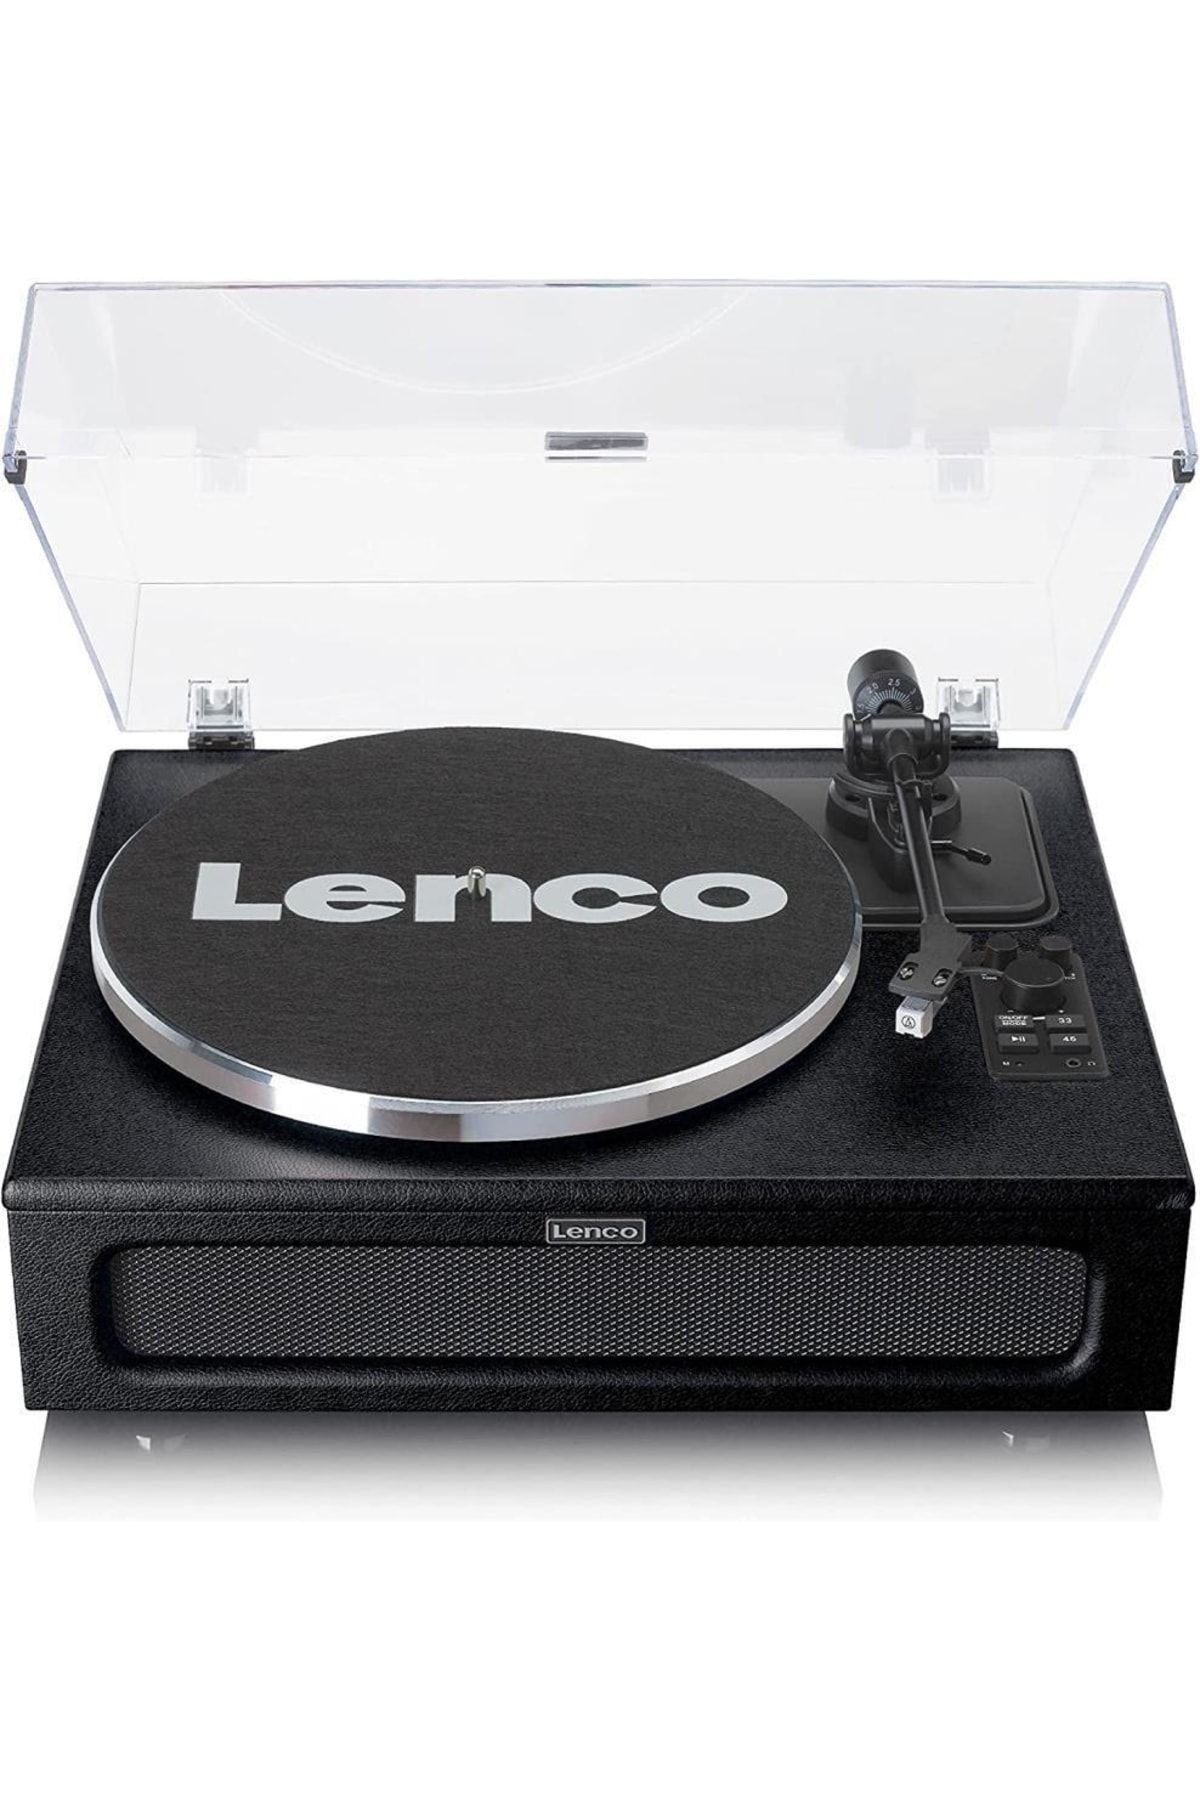 Lenco Ls-430bk 4 Dahili Hoparlörlü Bluetoothlu Pikap Plak Çalar Siyah